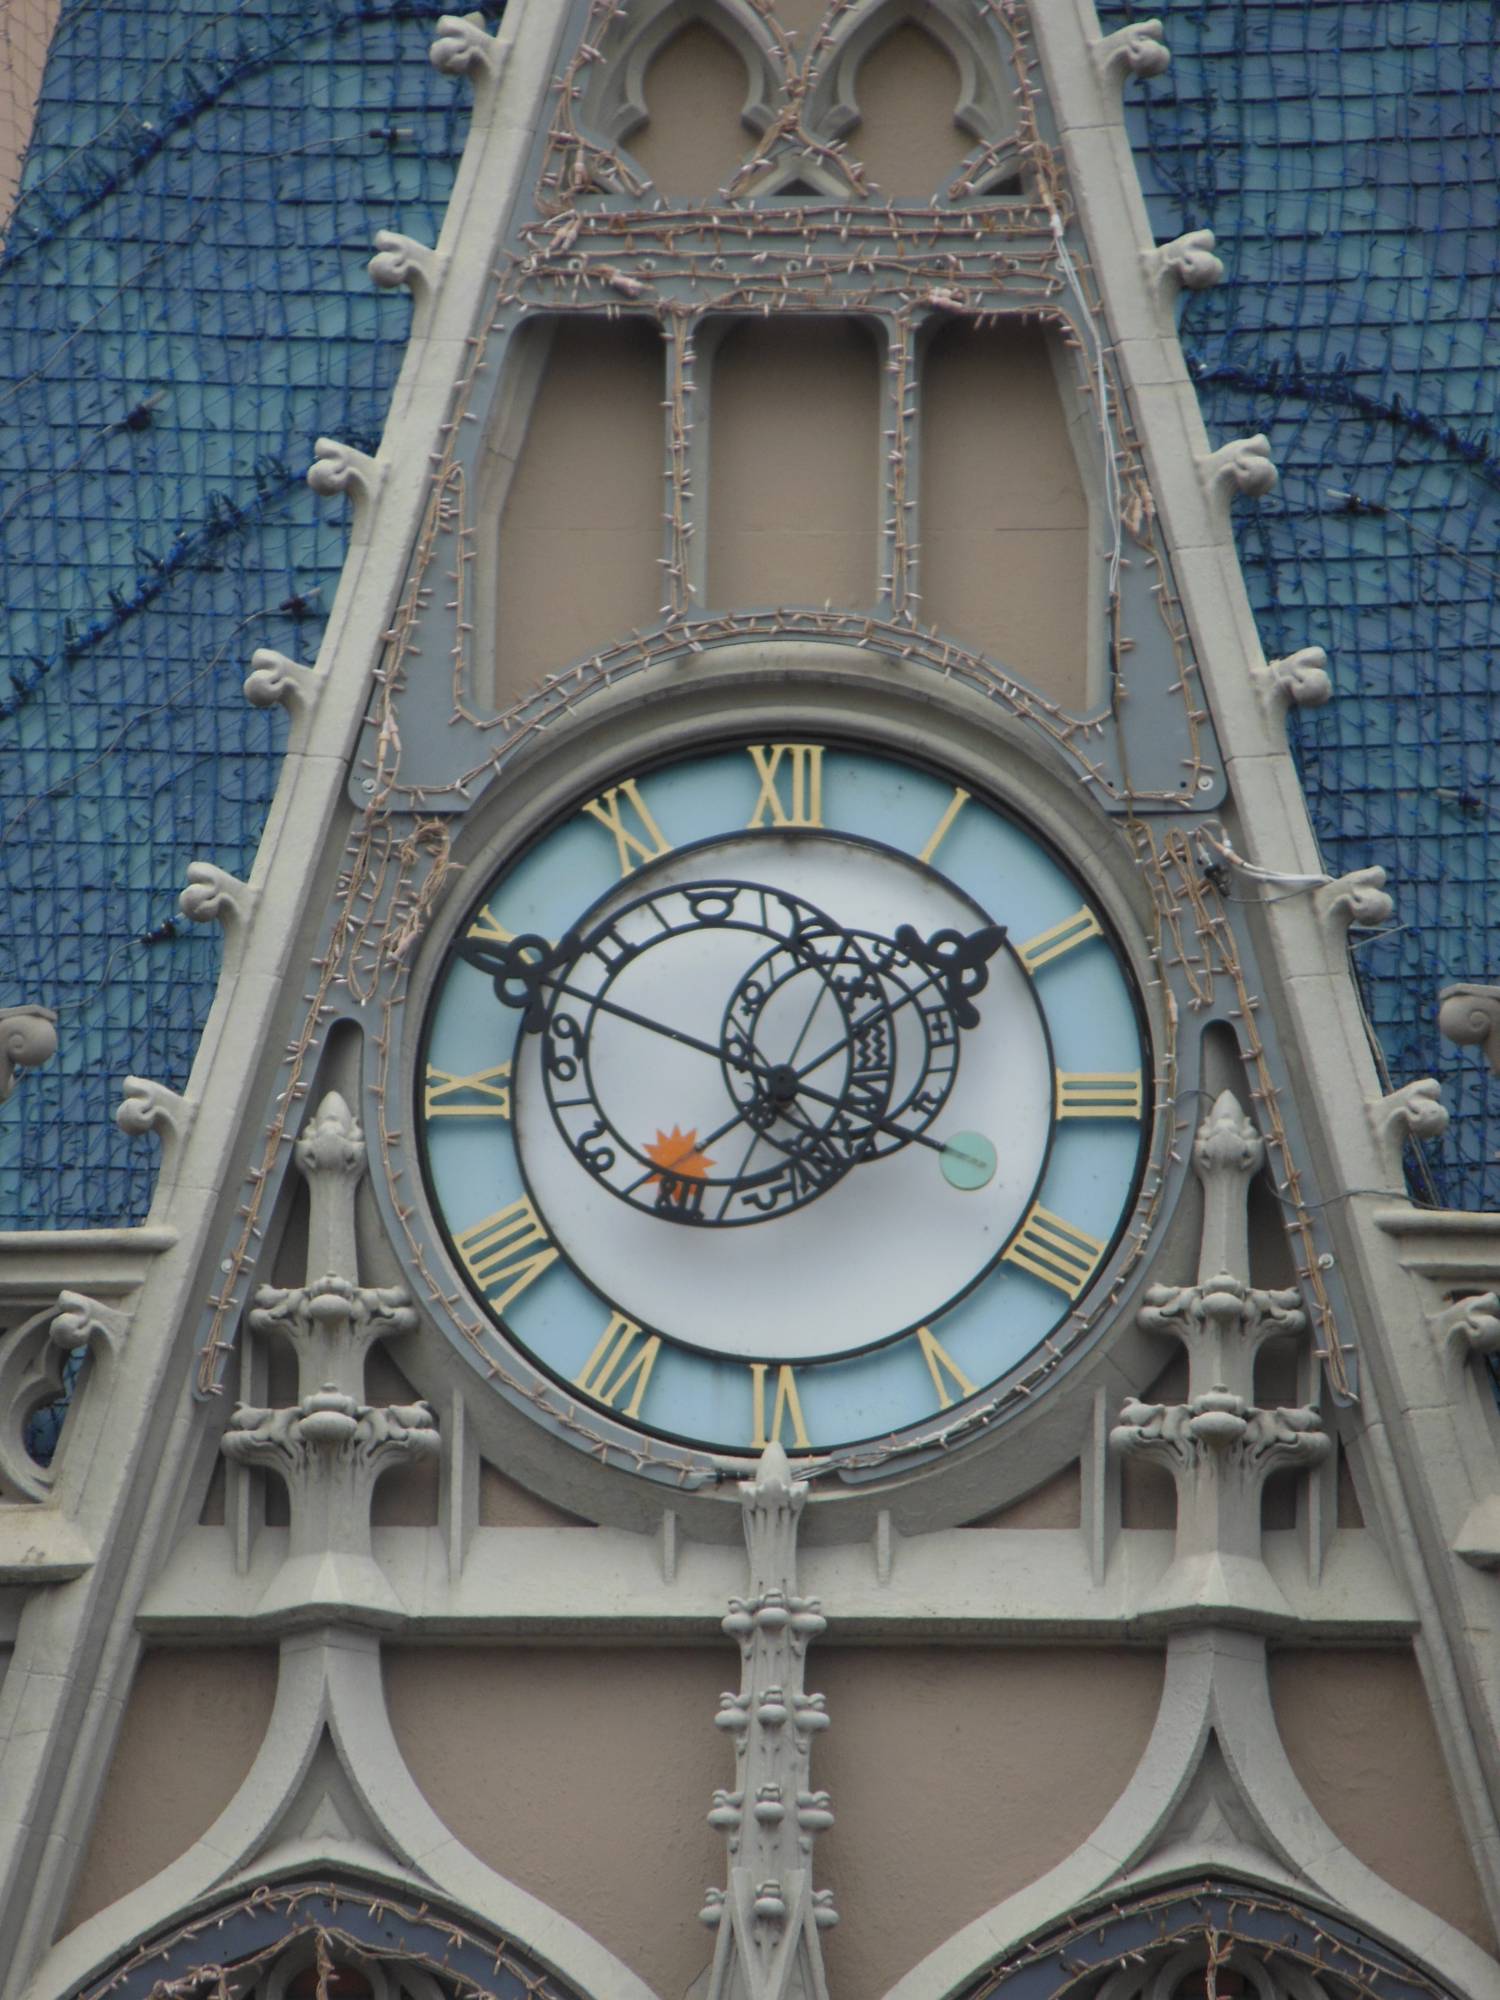 Magic Kingdom - Cinderella's Castle clock